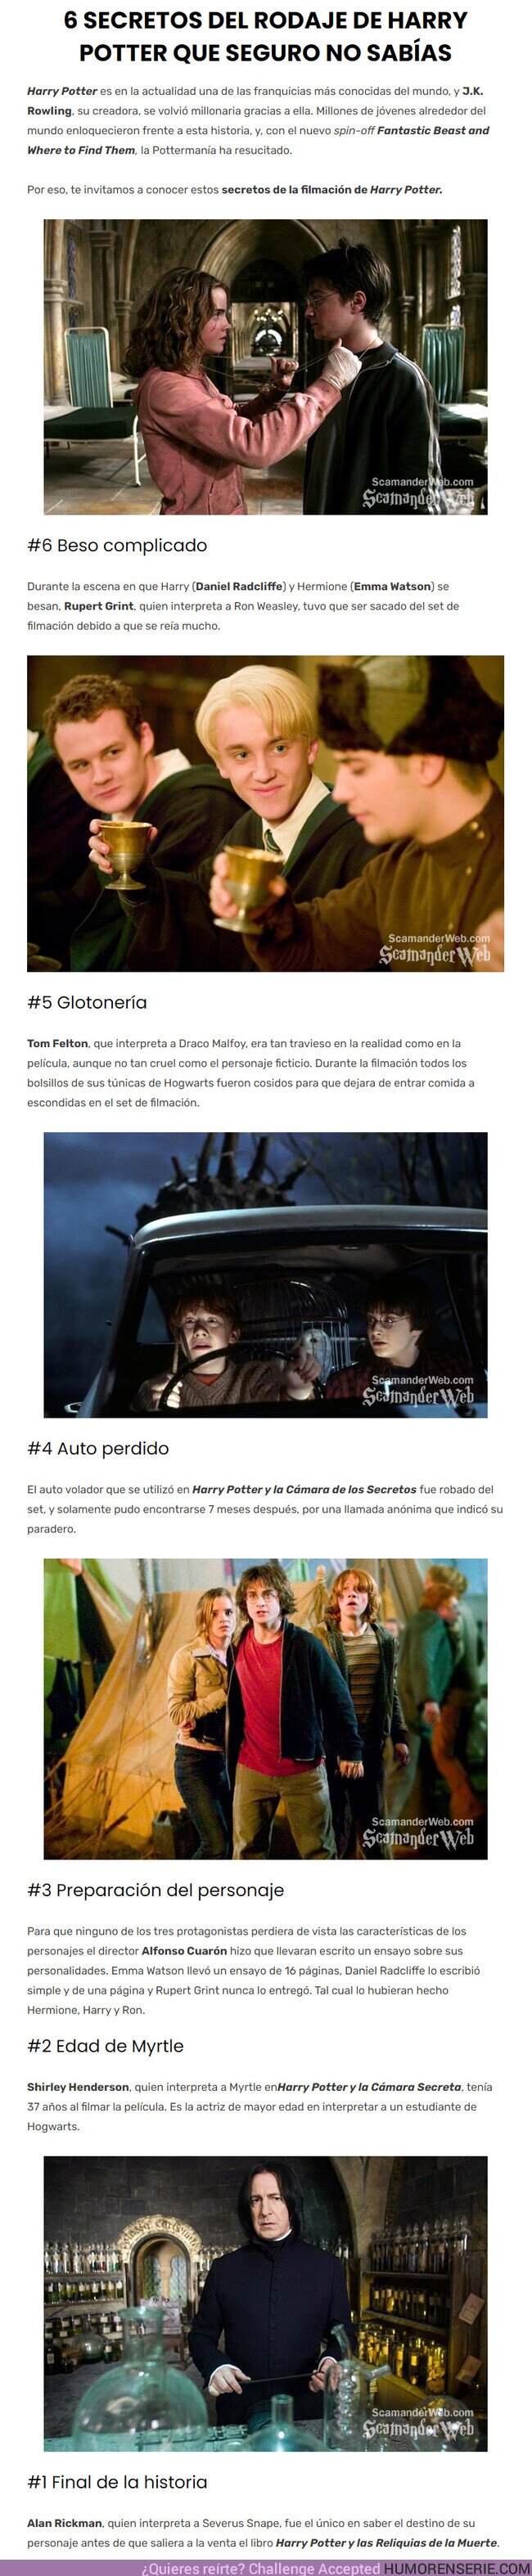 83212 - Secretos del rodaje de Harry Potter